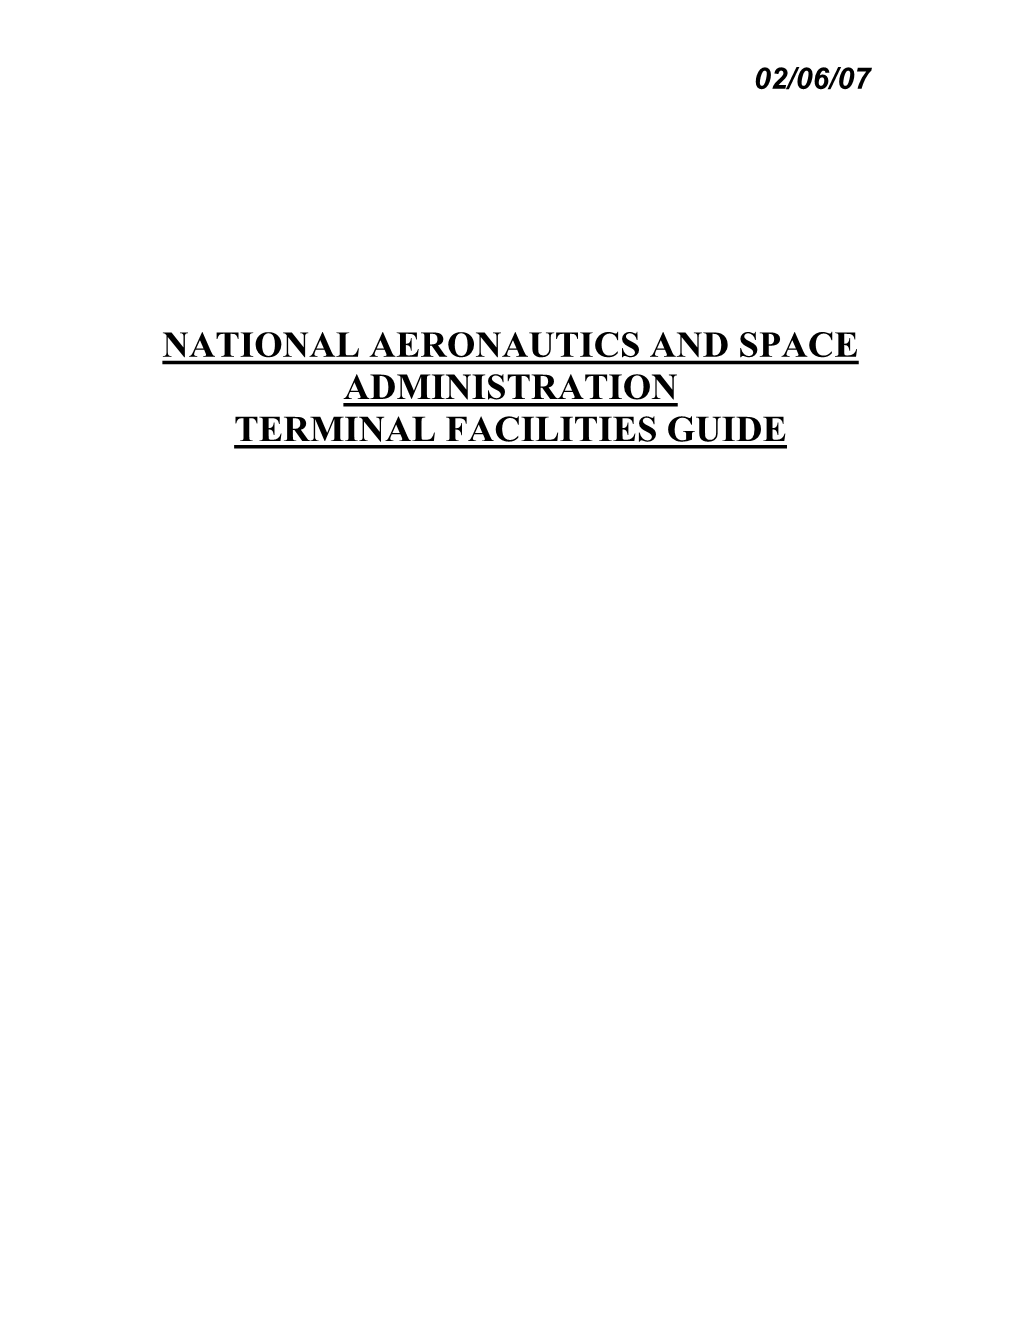 National Aeronautics and Space Administration Terminal Facilities Guide